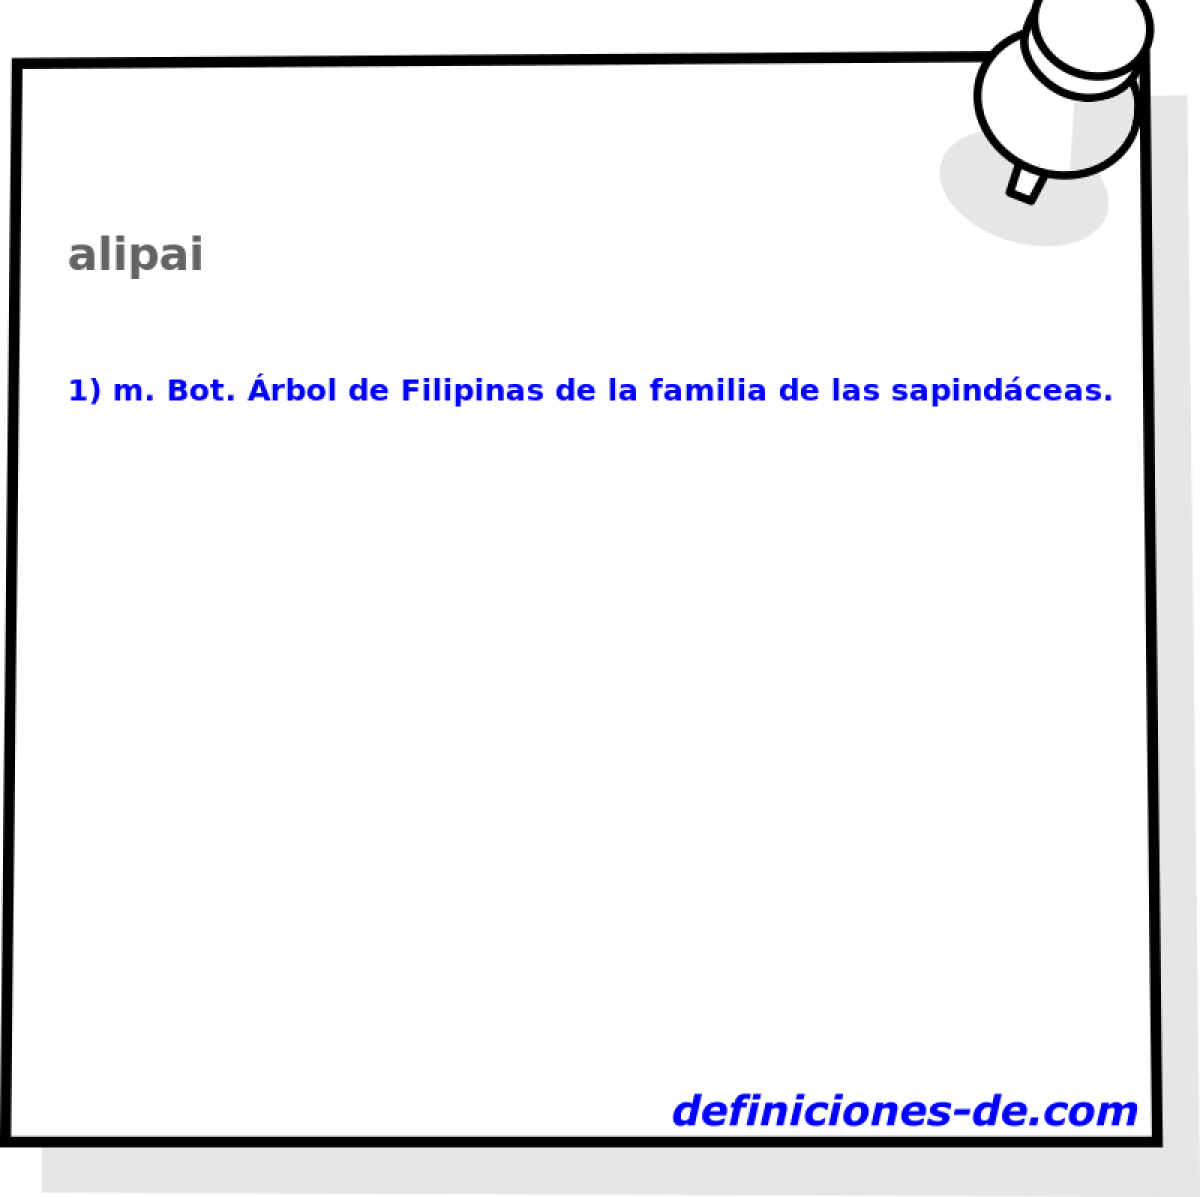 alipai 